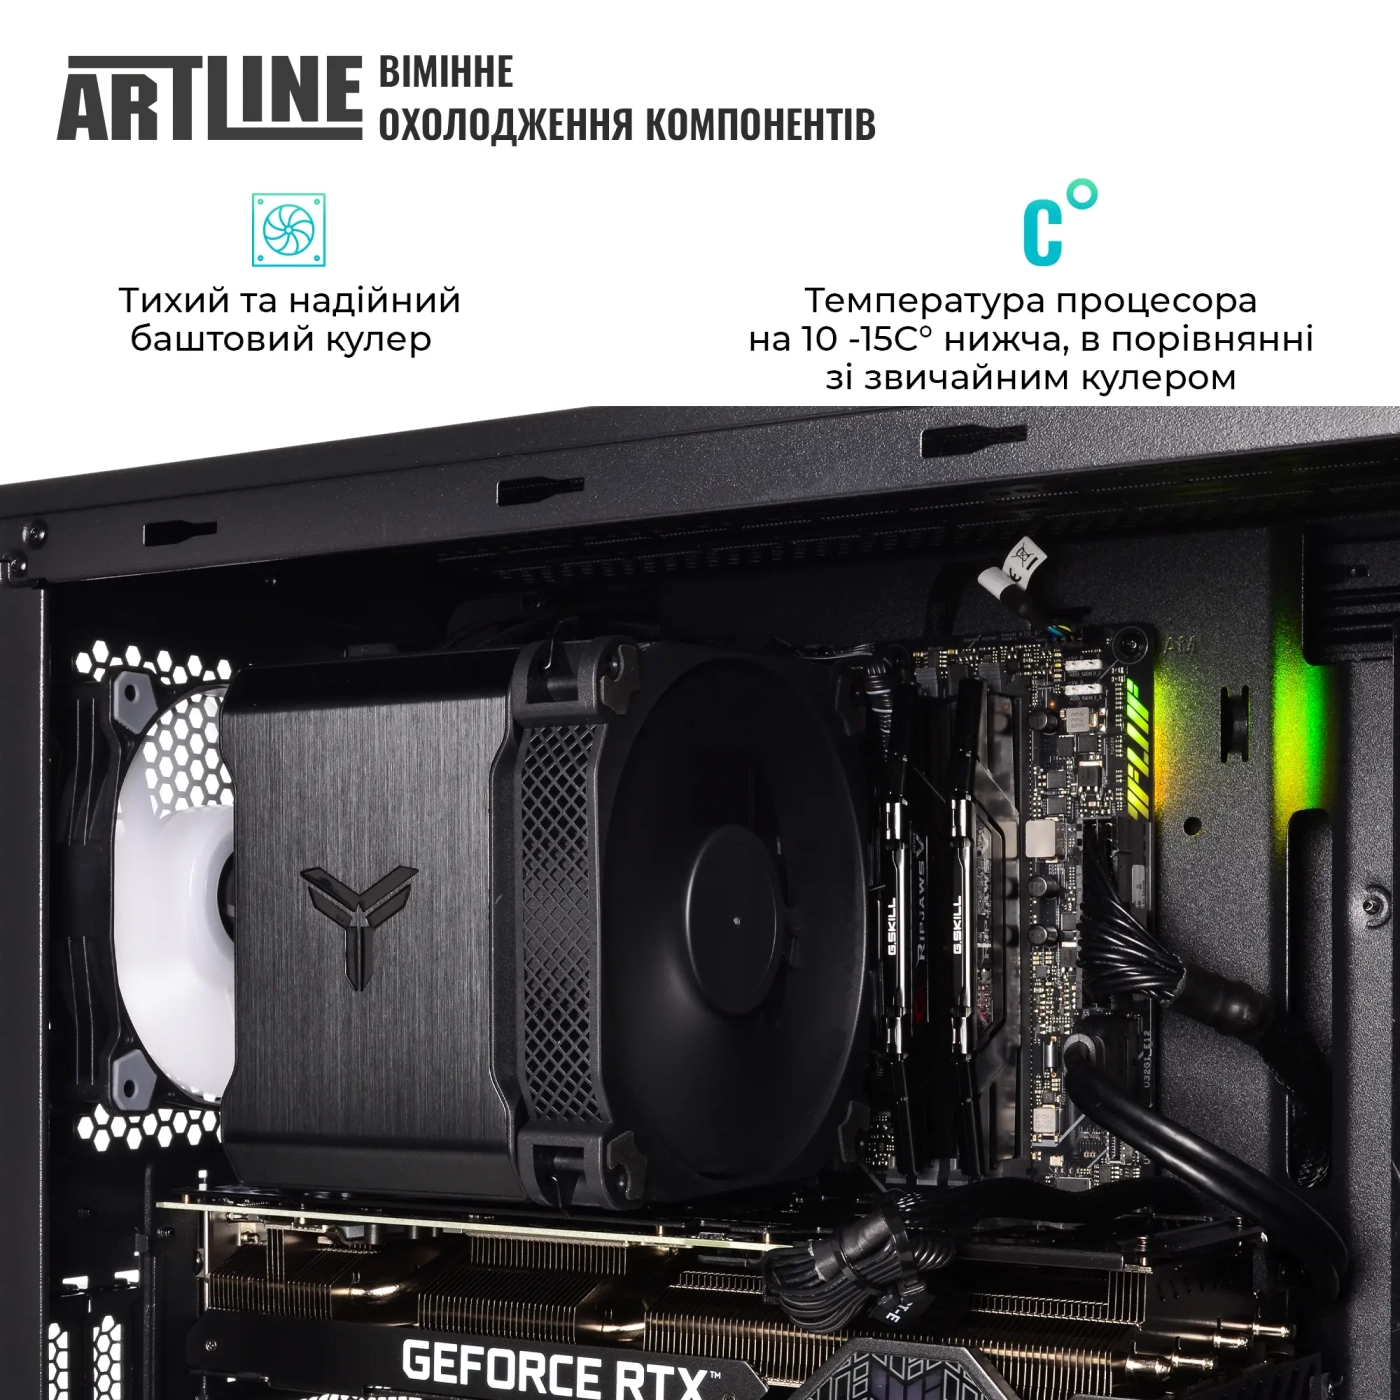 Купить Компьютер ARTLINE Overlord X65 (X65v41) - фото 5